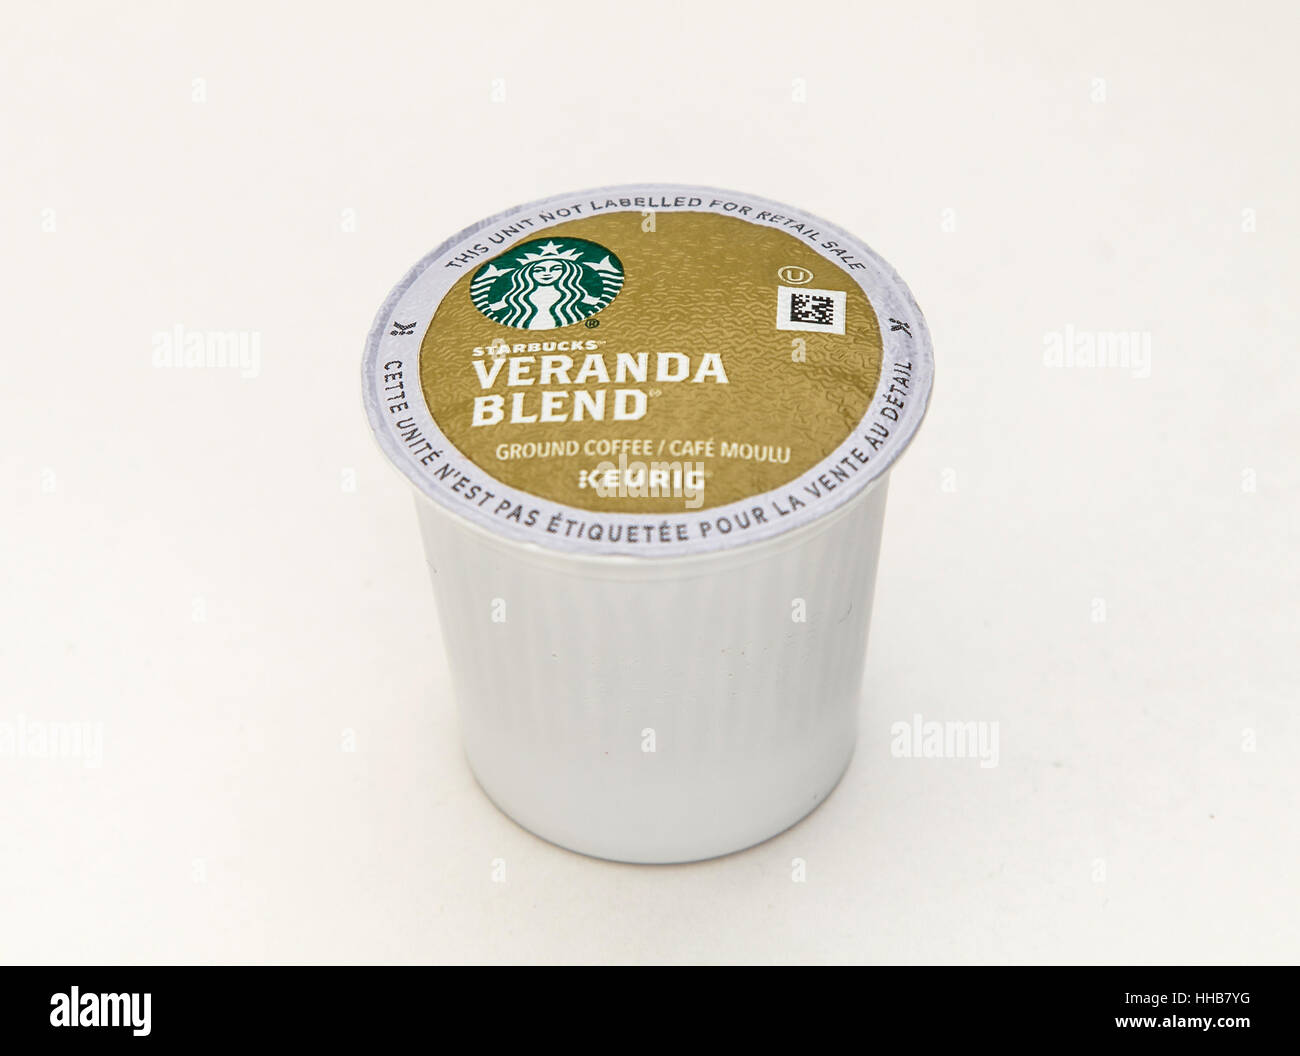 A single Starbucks Veranda Blend coffee capsule for Keurig coffee machine is seen against white background. Stock Photo